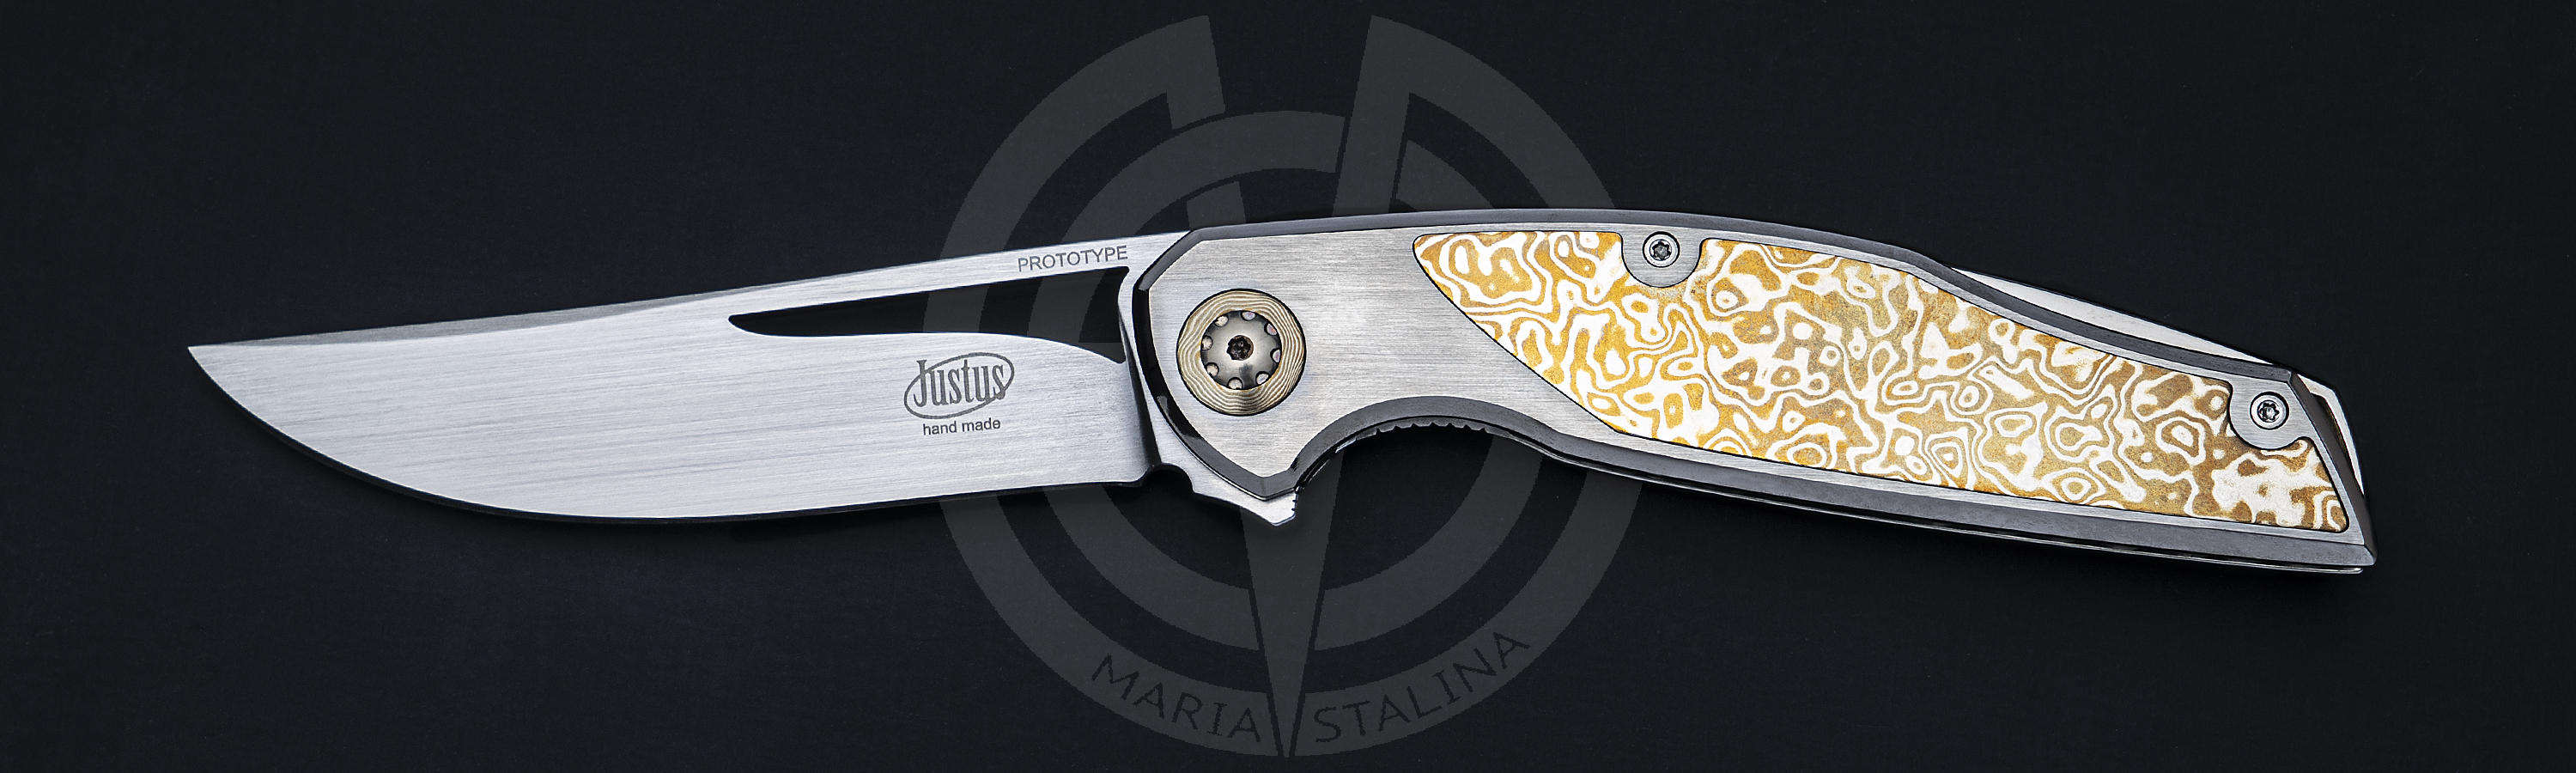 Justus Knives нож BLOND Прототип